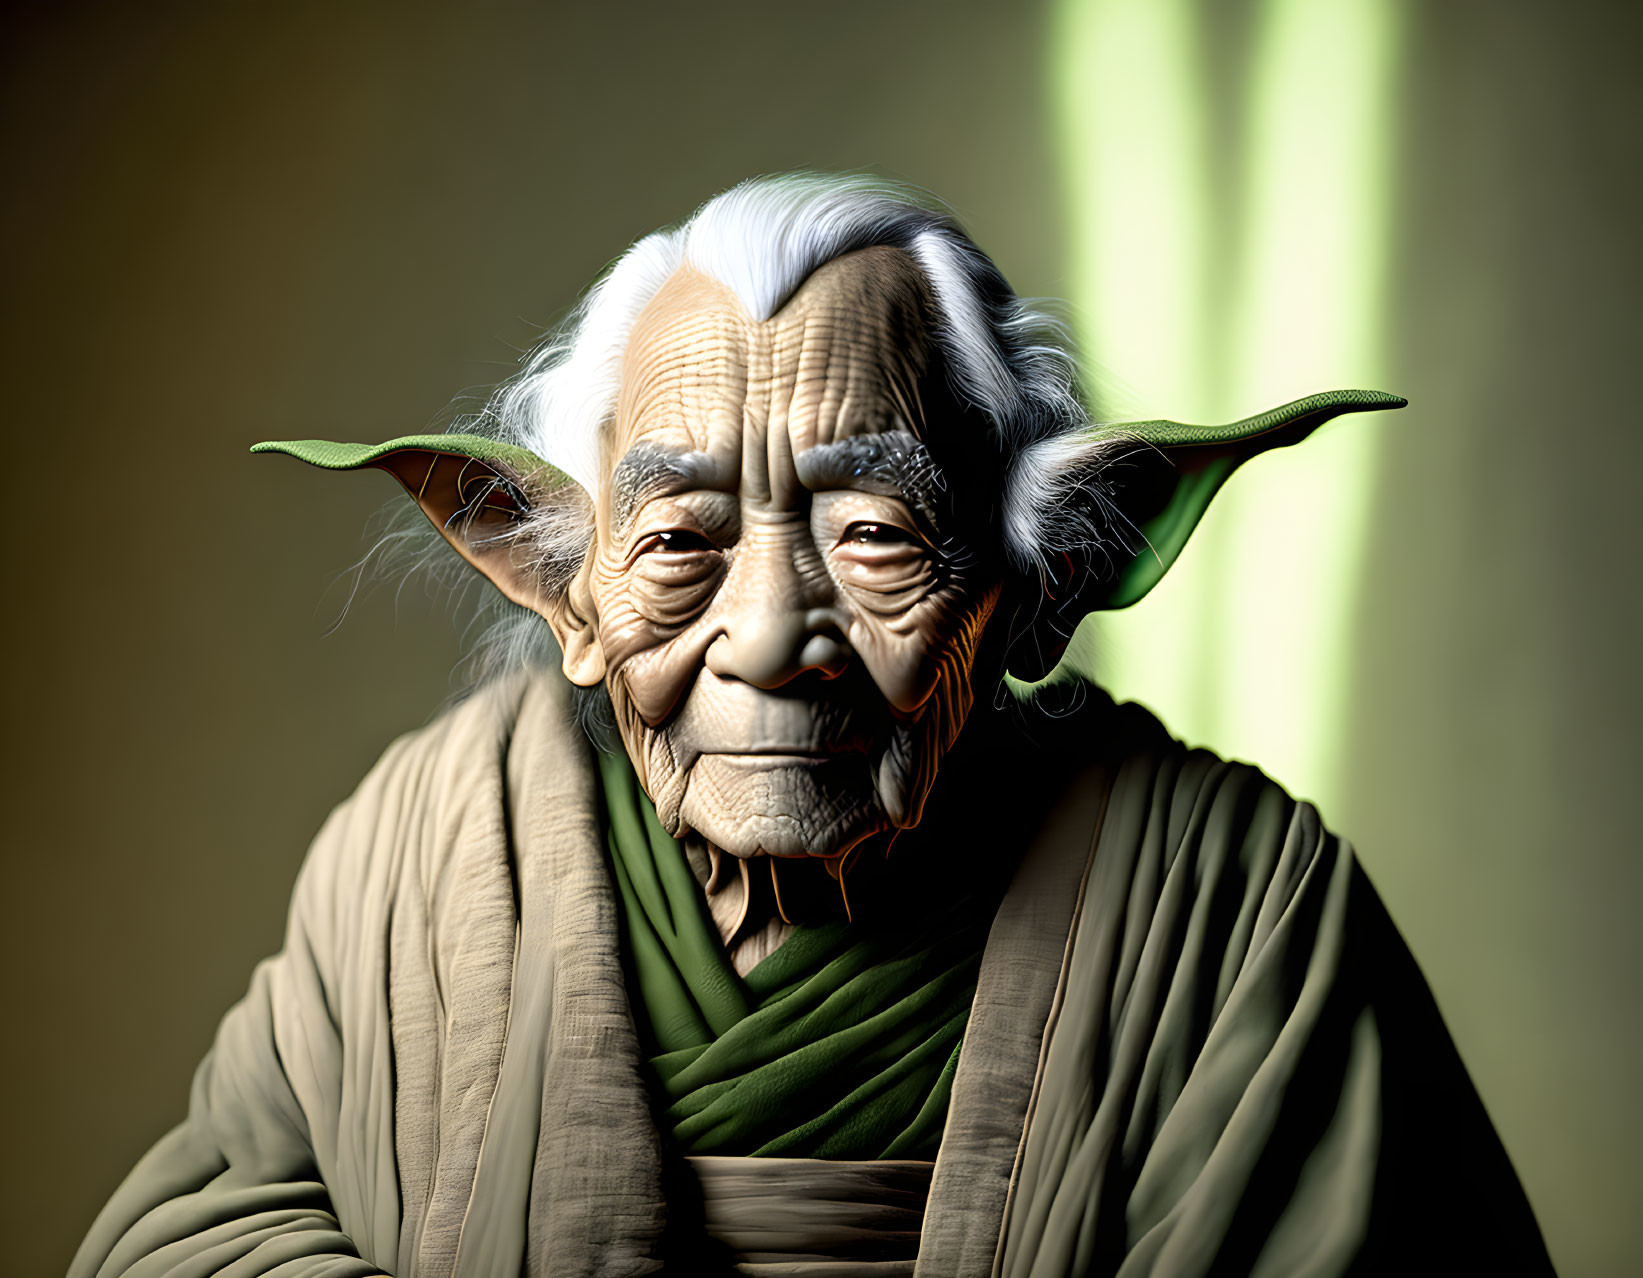 Master Yoda, the legendary Jedi Star Wars